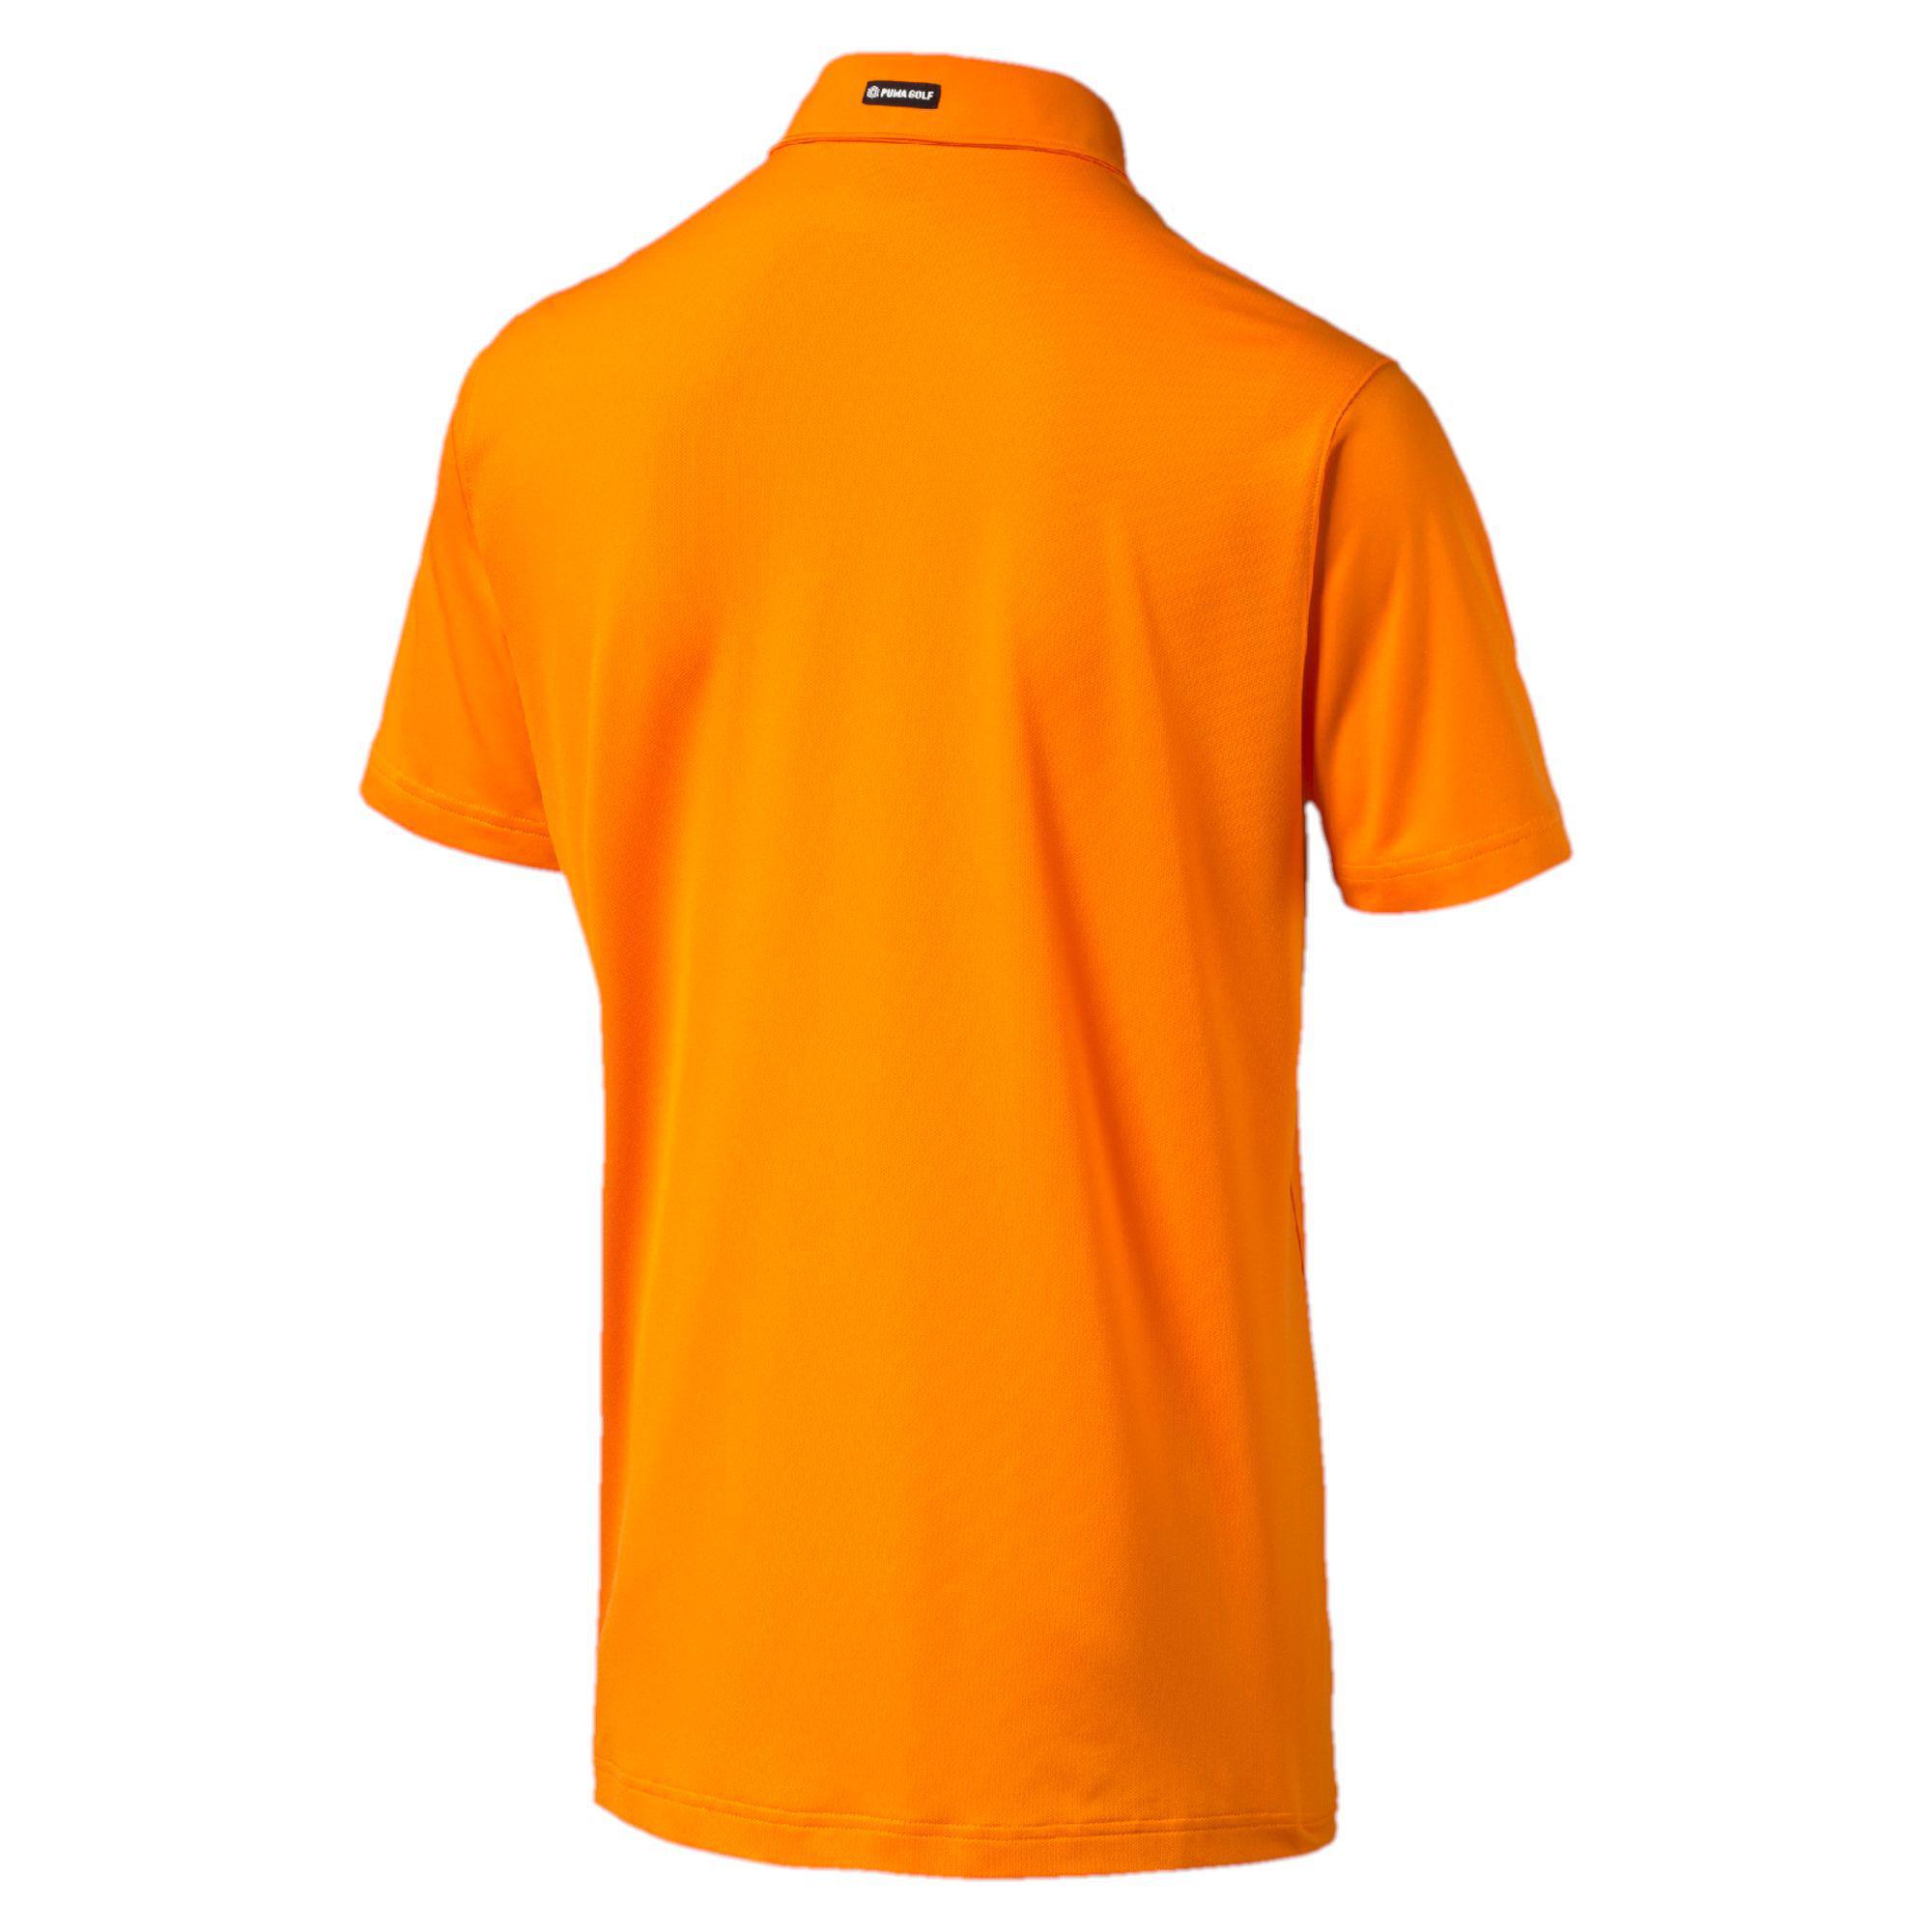 Lyst - PUMA Pounce Golf Polo Shirt in Orange for Men